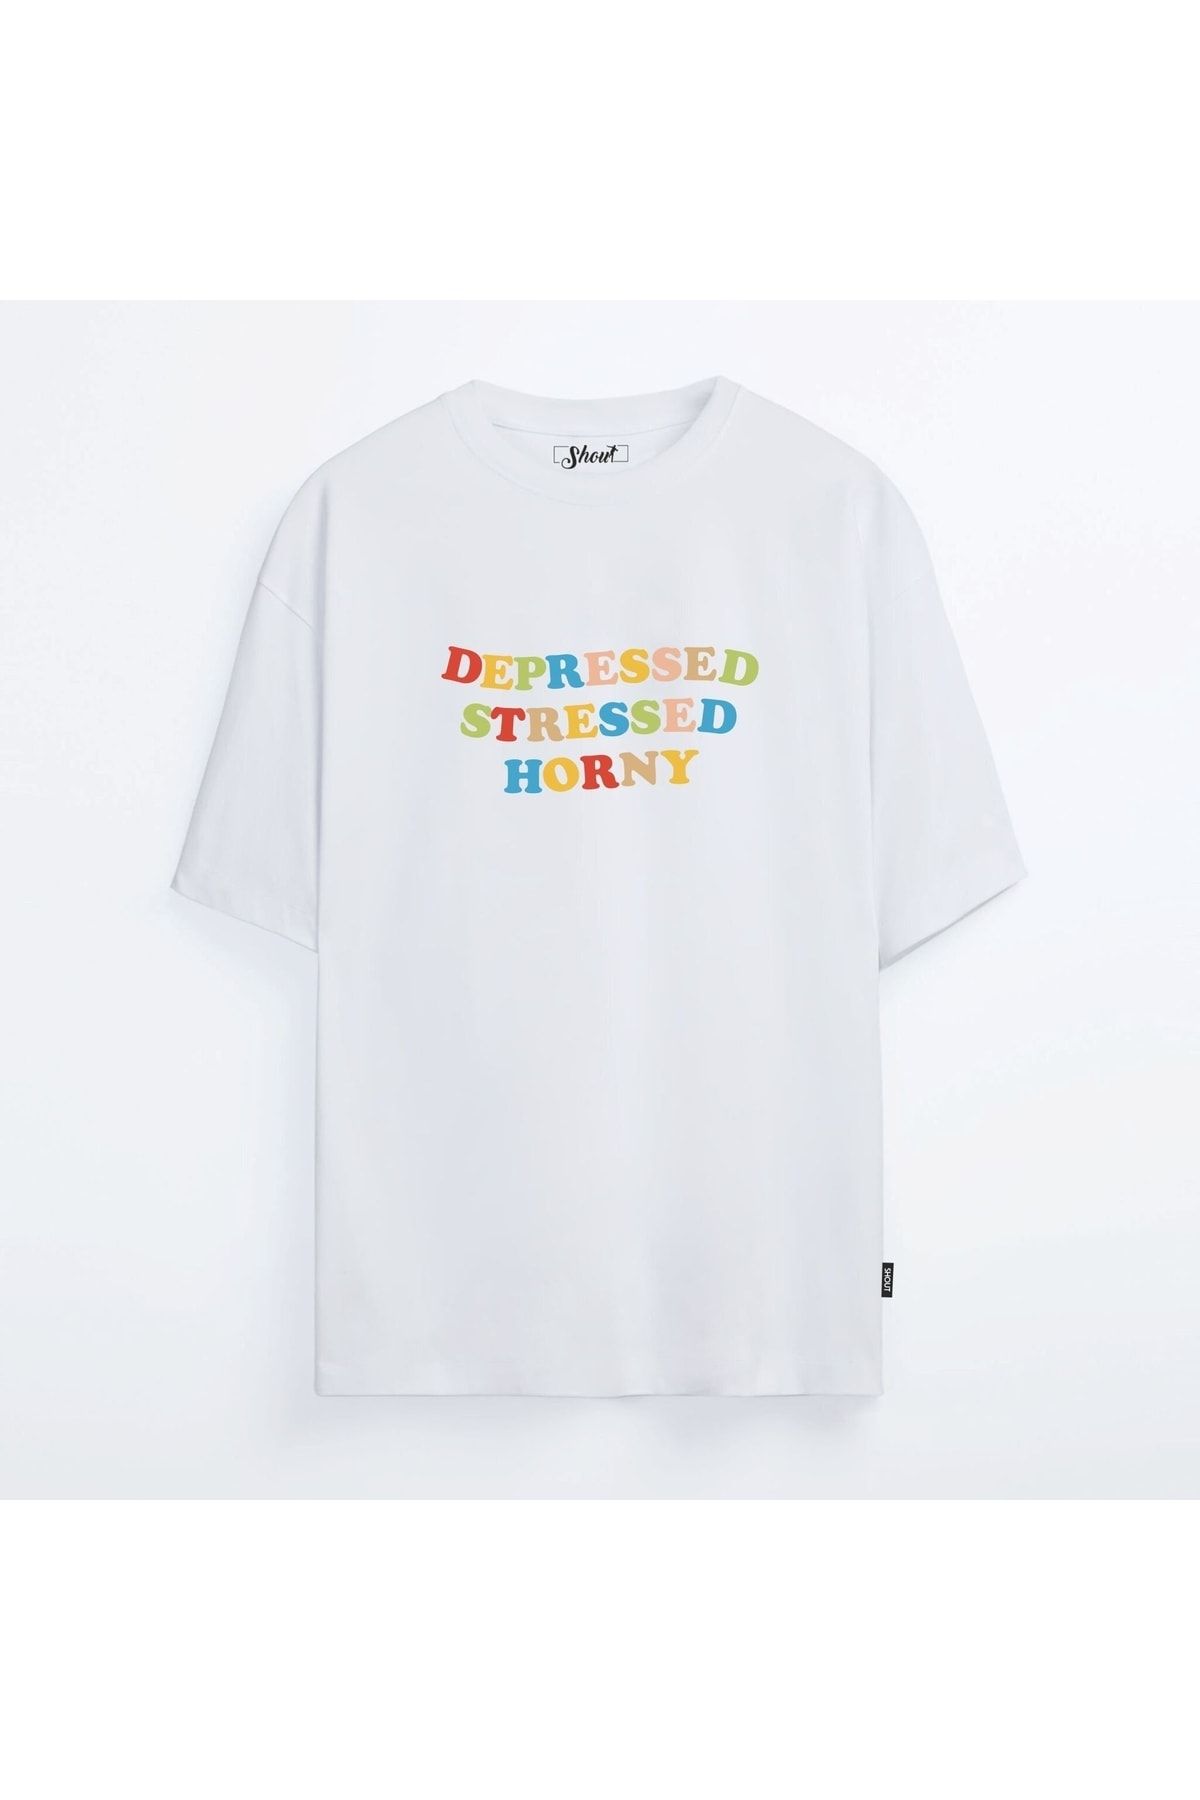 Shout Oversize Depressed Stressed Horny Oldschool Unisex T-shirt